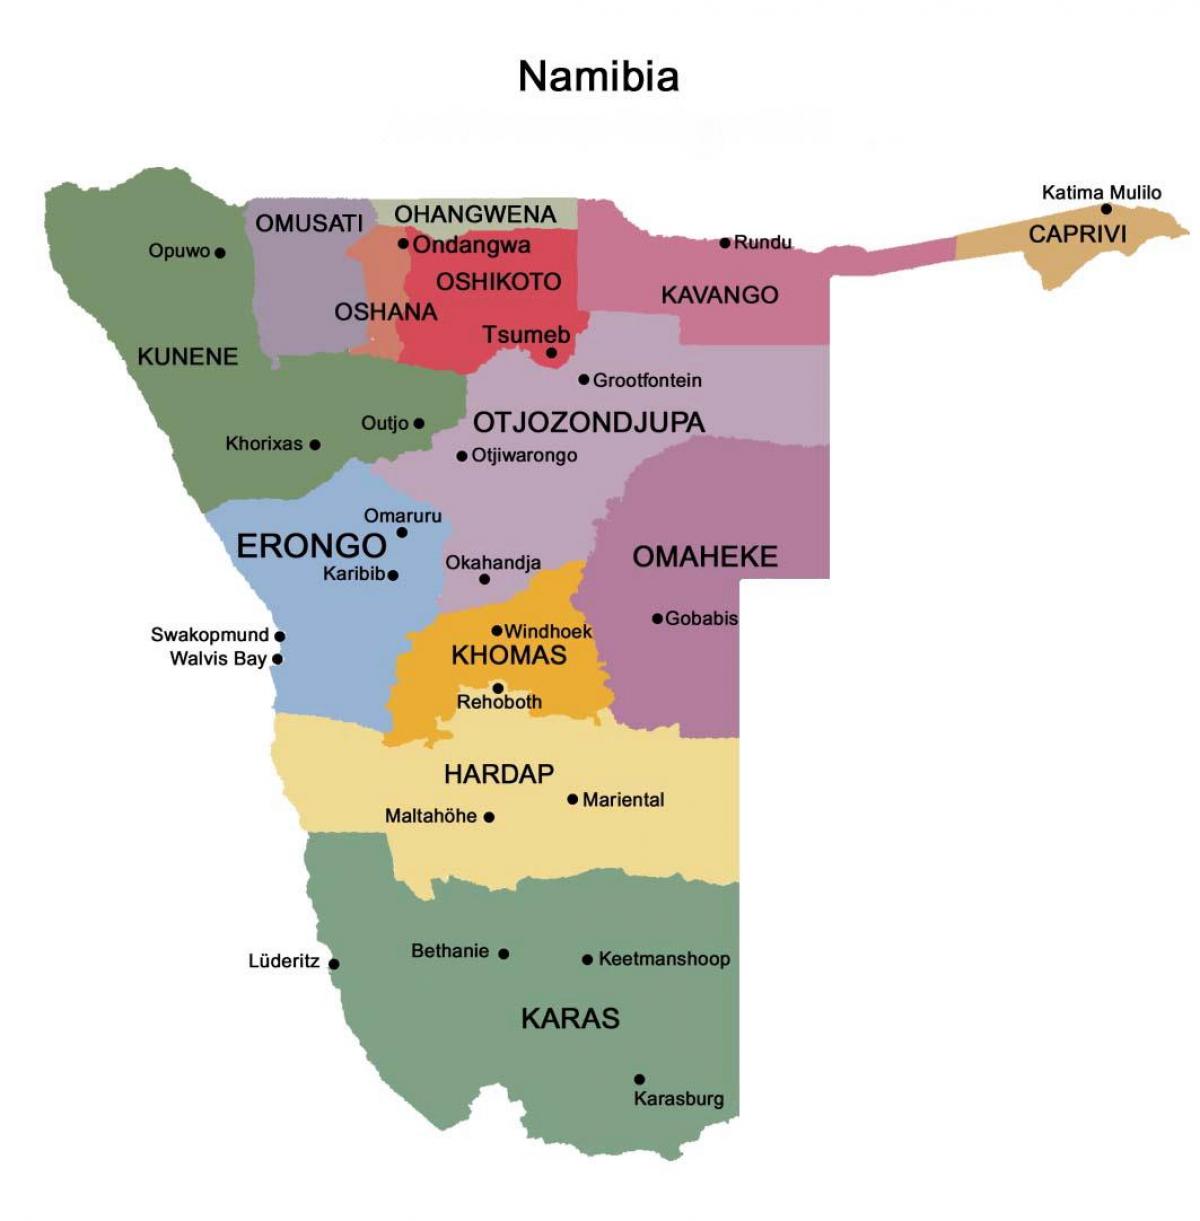 Kort over Namibia med regioner